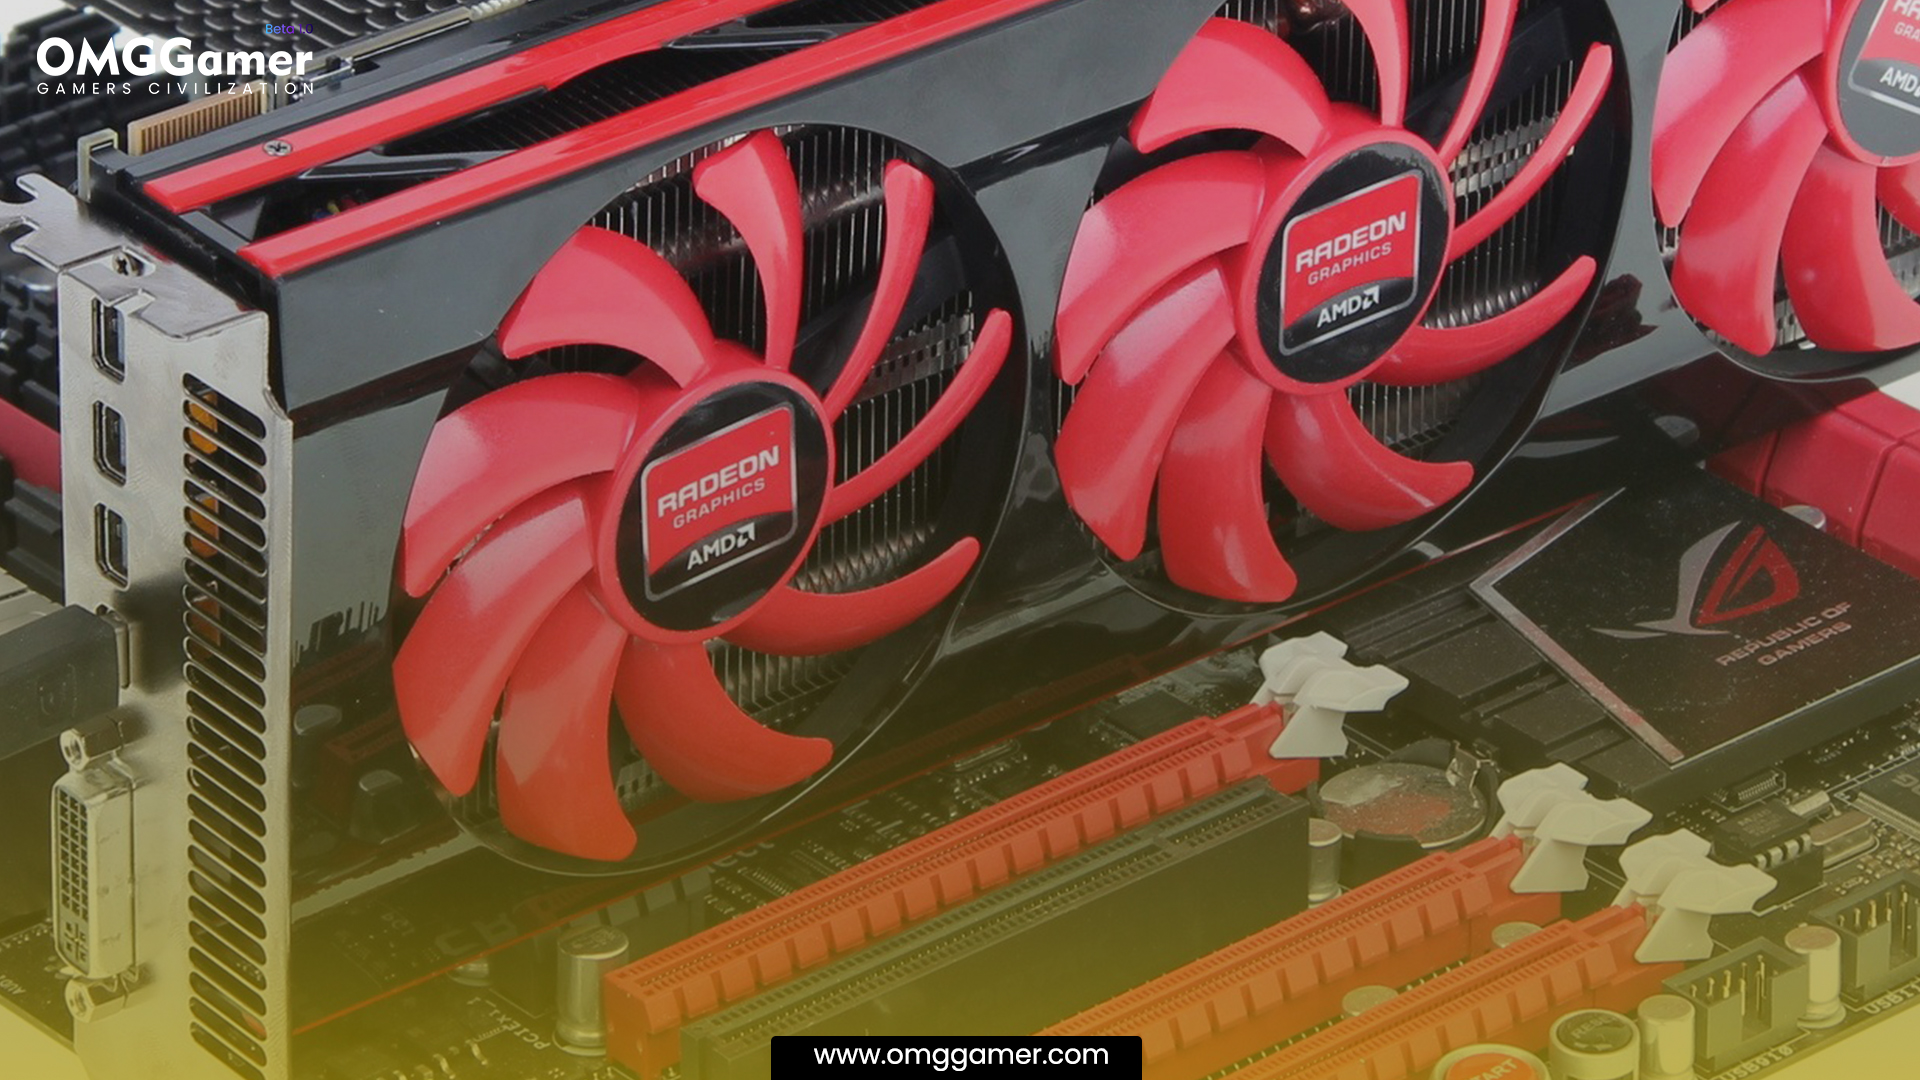 About AMD Radeon HD 7990